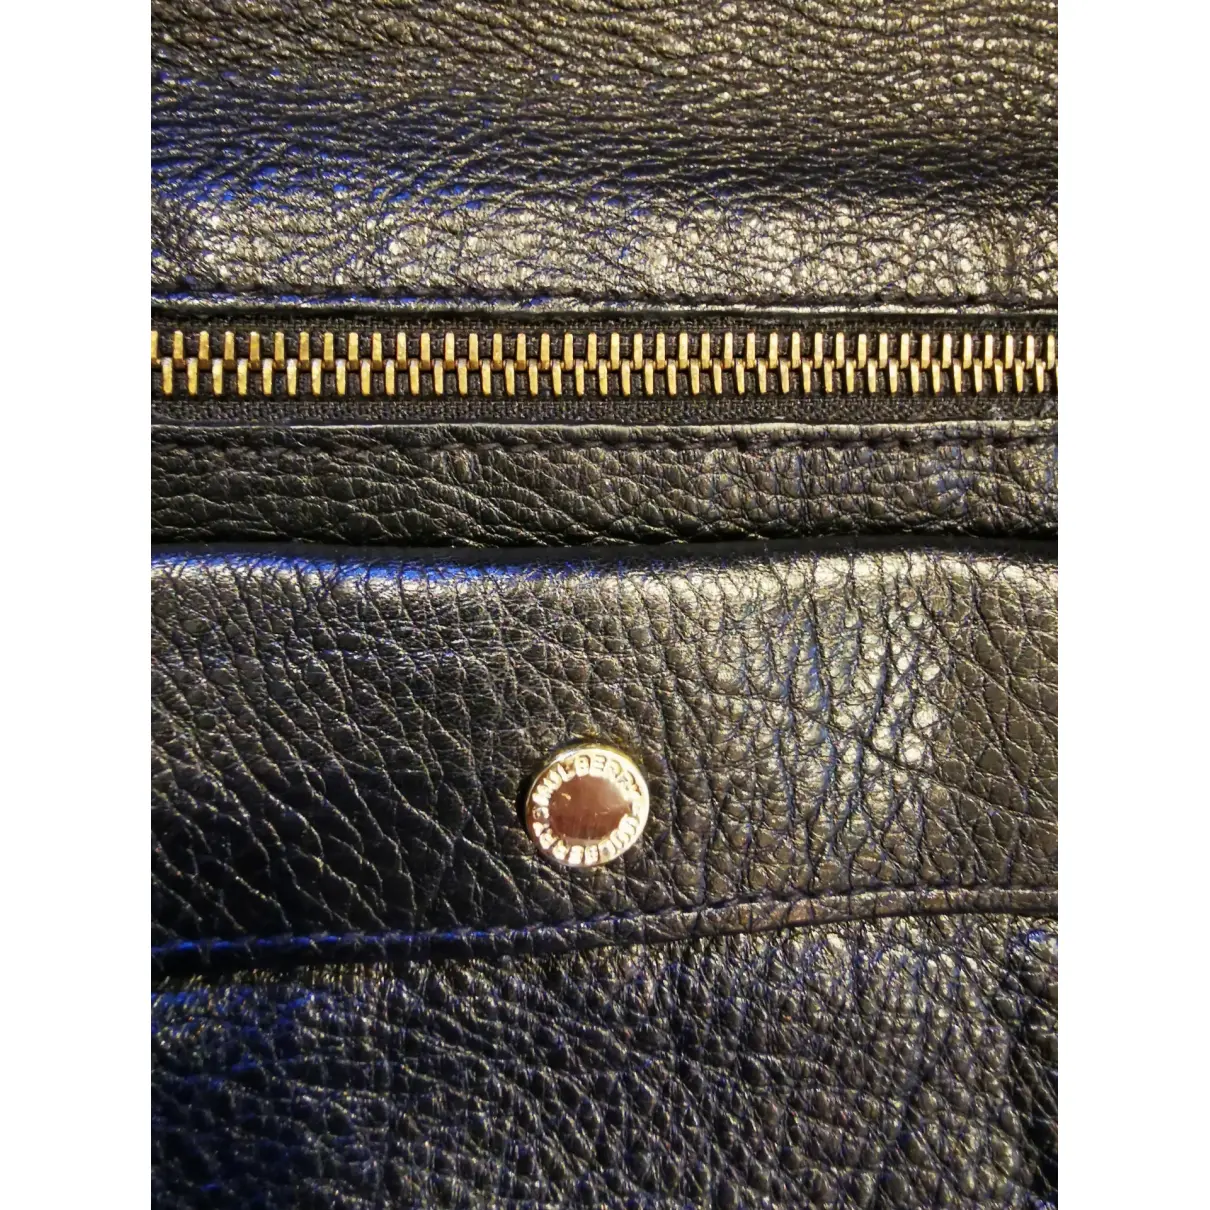 Daria leather handbag Mulberry